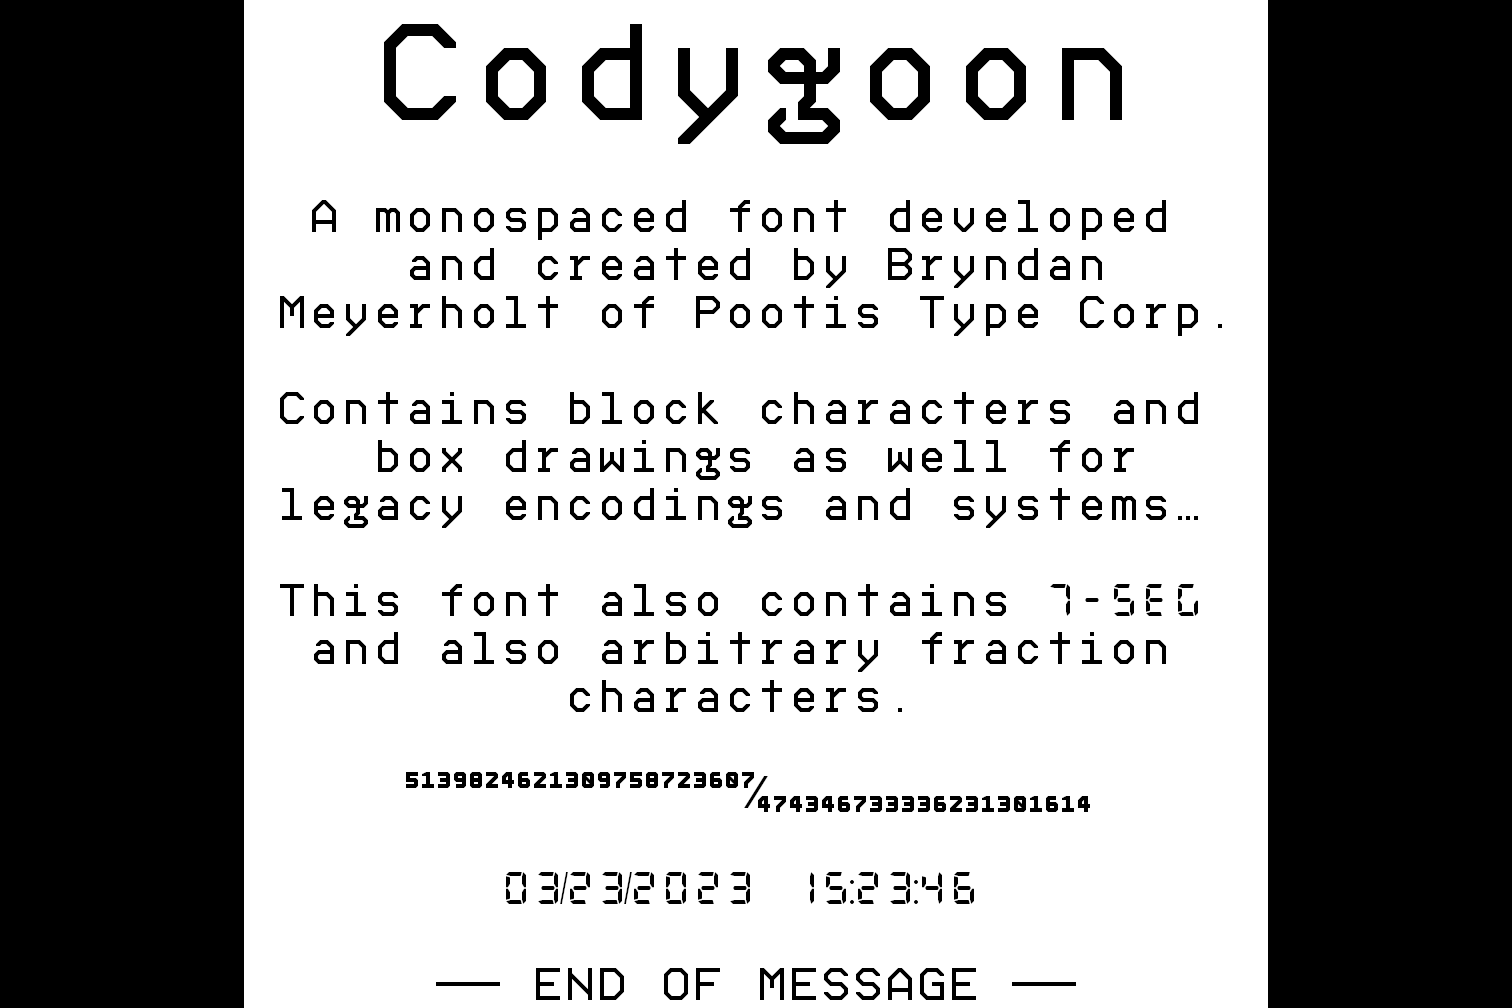 Codygoon